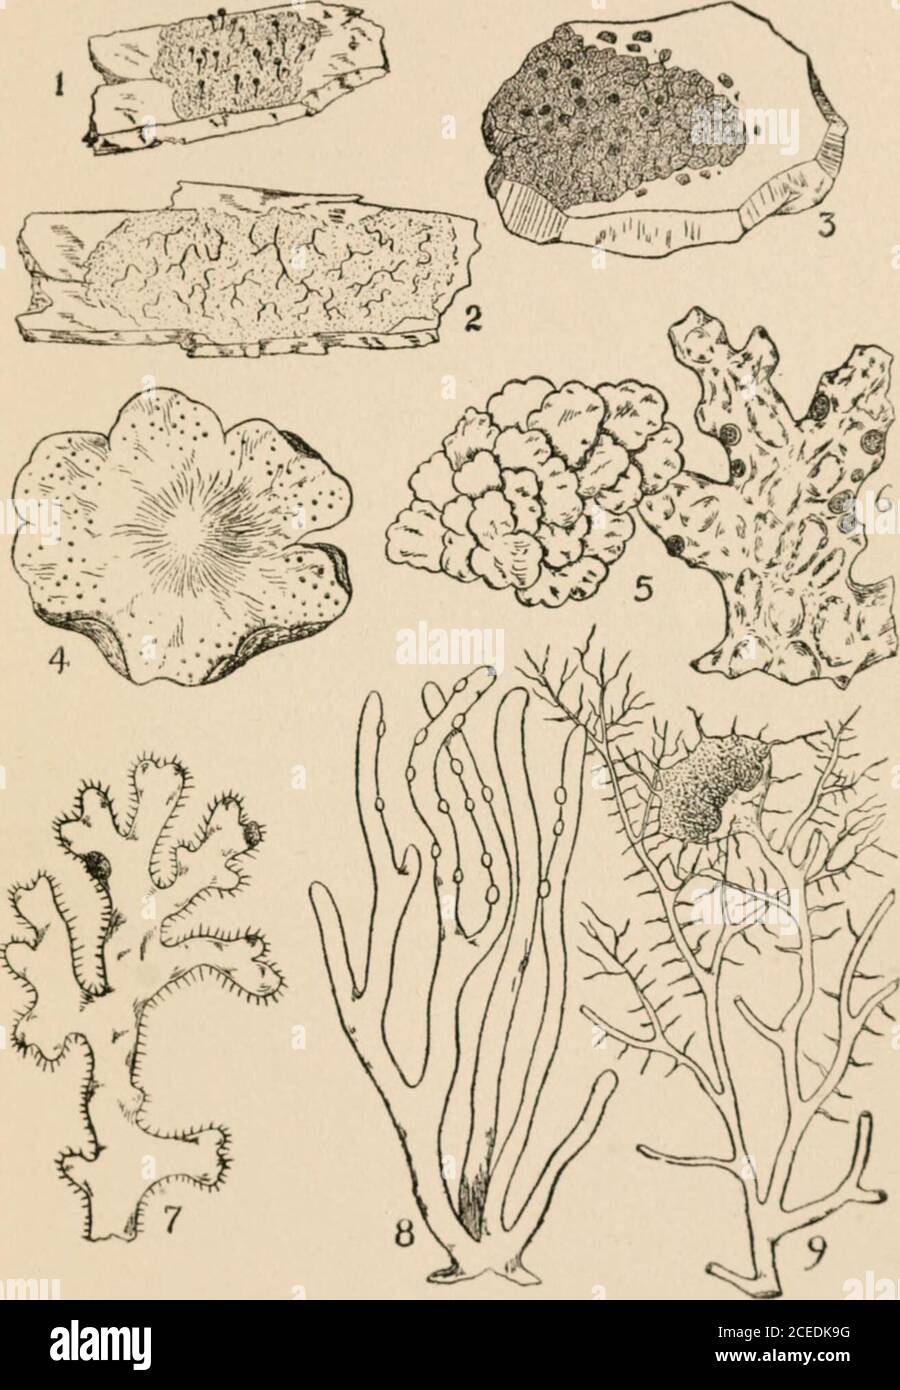 . A guide to the study of lichens. ALGAL TYPES. PLATE II.Lichen-types. Crustose forms: 1. Calicium hypereUum. 2. Graphis scripta. 3. Rhwdina oreina. Foliose forms: 4. Endocarpon miniattim. 5. Collema nigrescens. 6. Sticta puhnonarla. Fruticose forms. 7. Cetraria Islandica. 8. Rocella tinctoria. 9. Usnea harhata. 1, 2 and 3 are about natural size. 4 to 9 inclusive are somewhat reduced. 6, 7 and 9 represent only portions ofplants. GUIDE TO LICHENS Schneider. Plate II.. LICHEX-TVPES. PLATE III. Histology of a Foliose Lichen. {Sticta amplissinia.) . Vertical section through apothecium : a, b, the Stock Photo